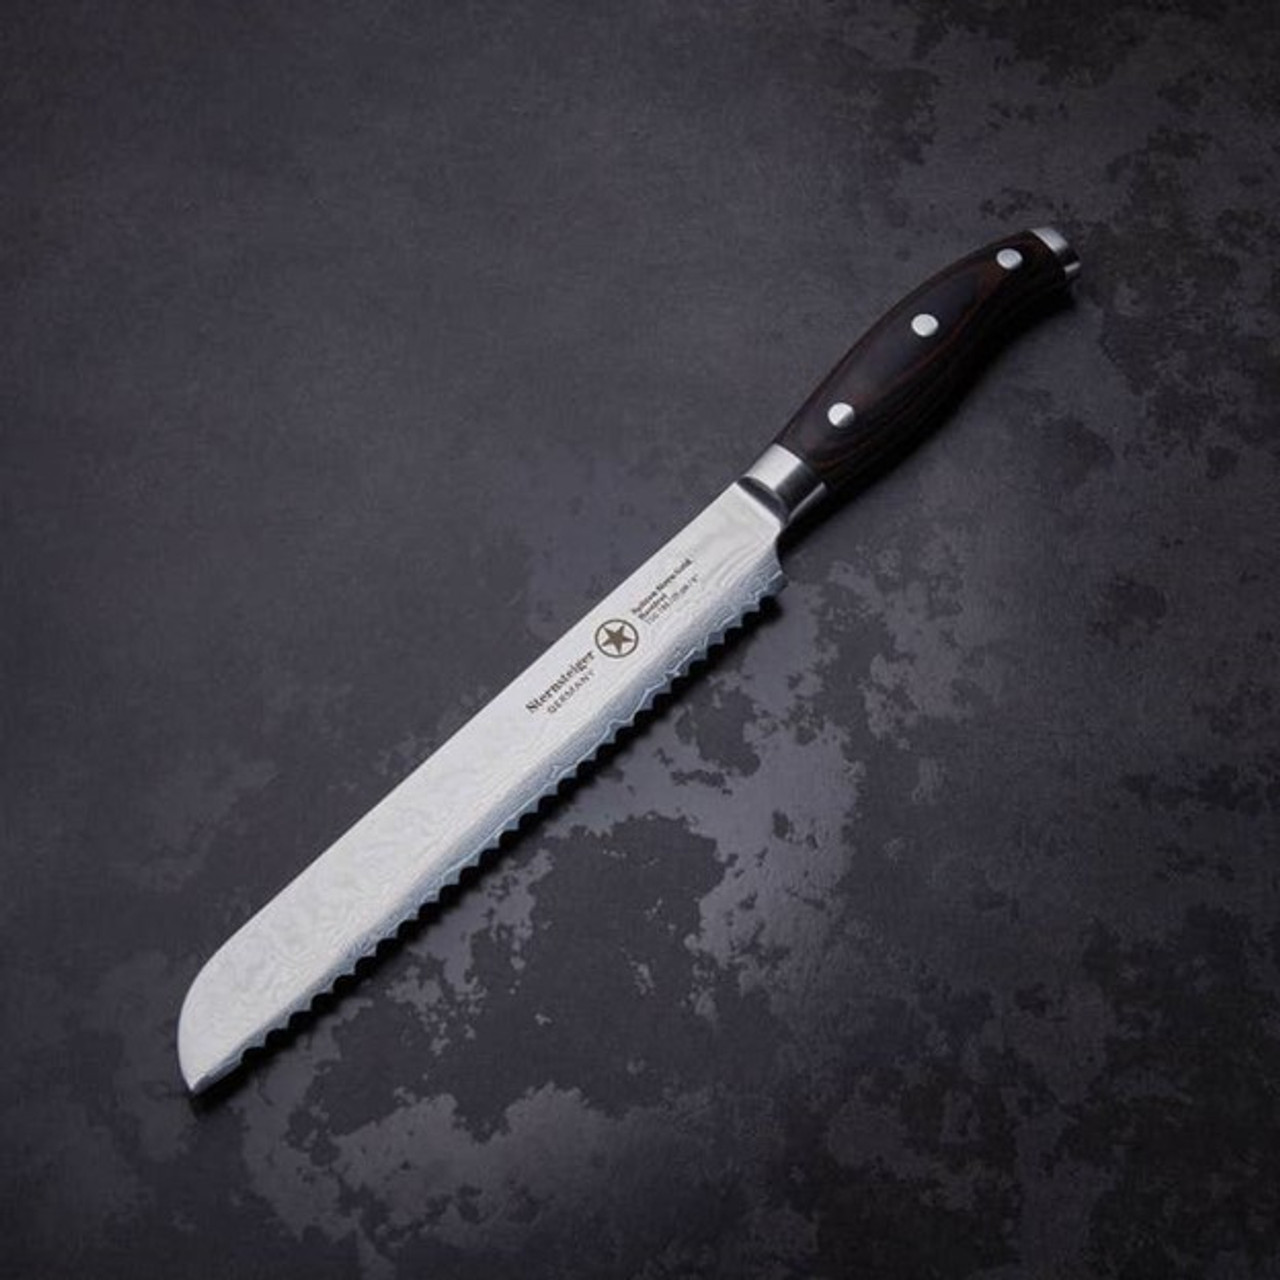 Sternsteiger 6 pc Damascus Knife Set- Japanese Damascus Steel Vg-10